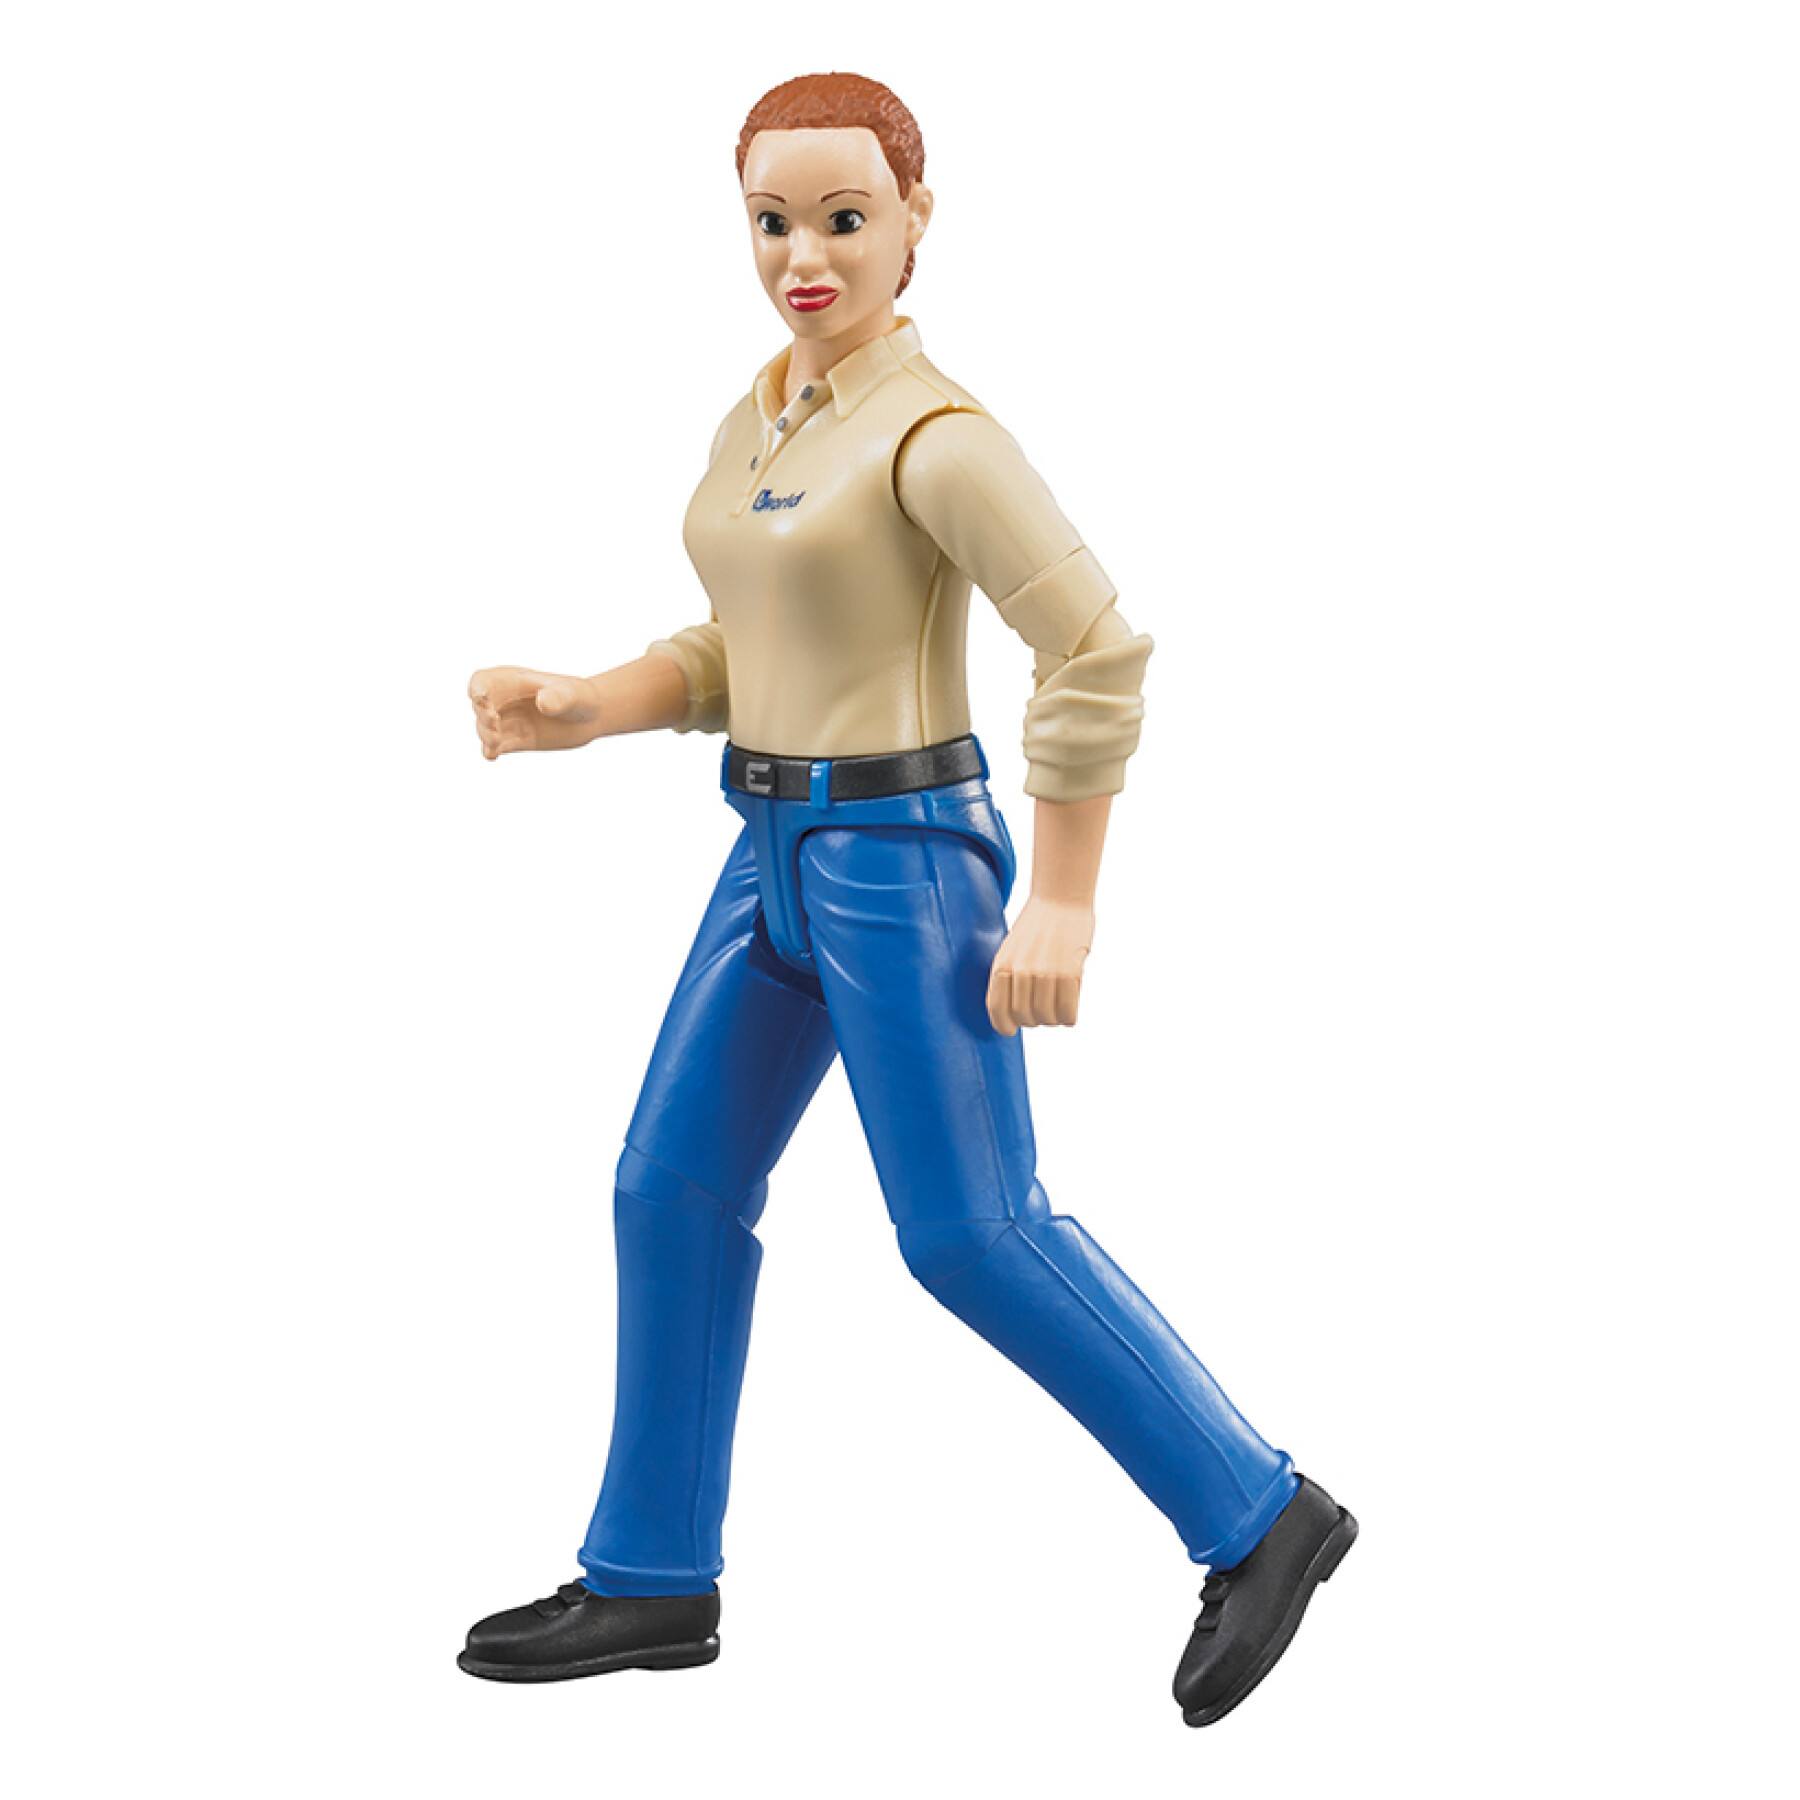 Figurine femme avec jean bleu Bruder